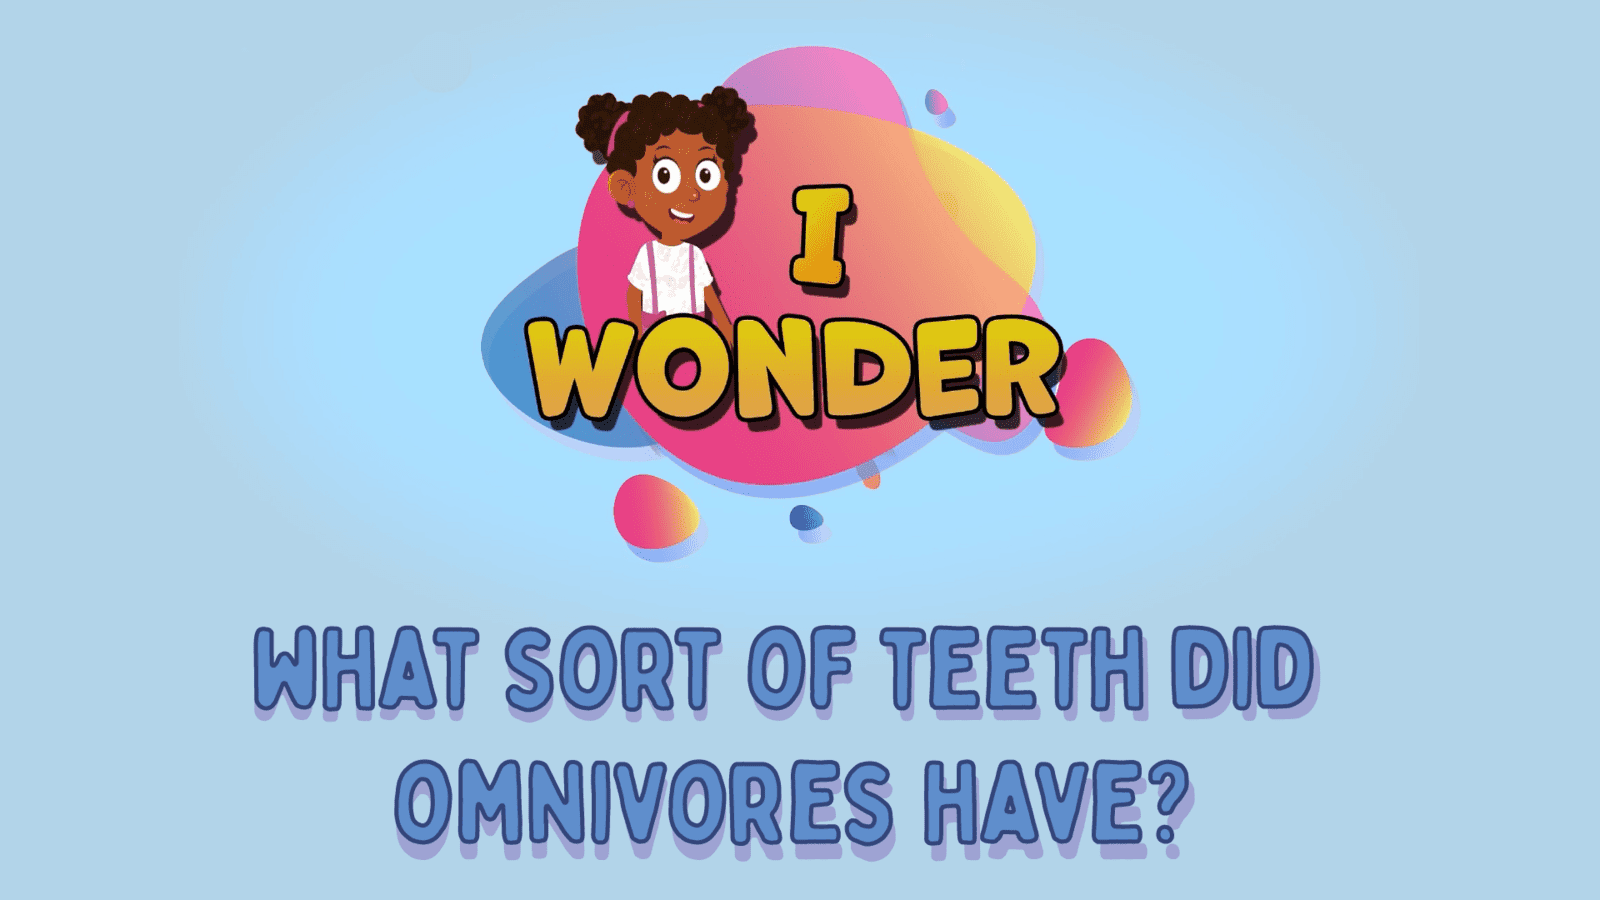 Teeth Did Omnivores Have LearningMole